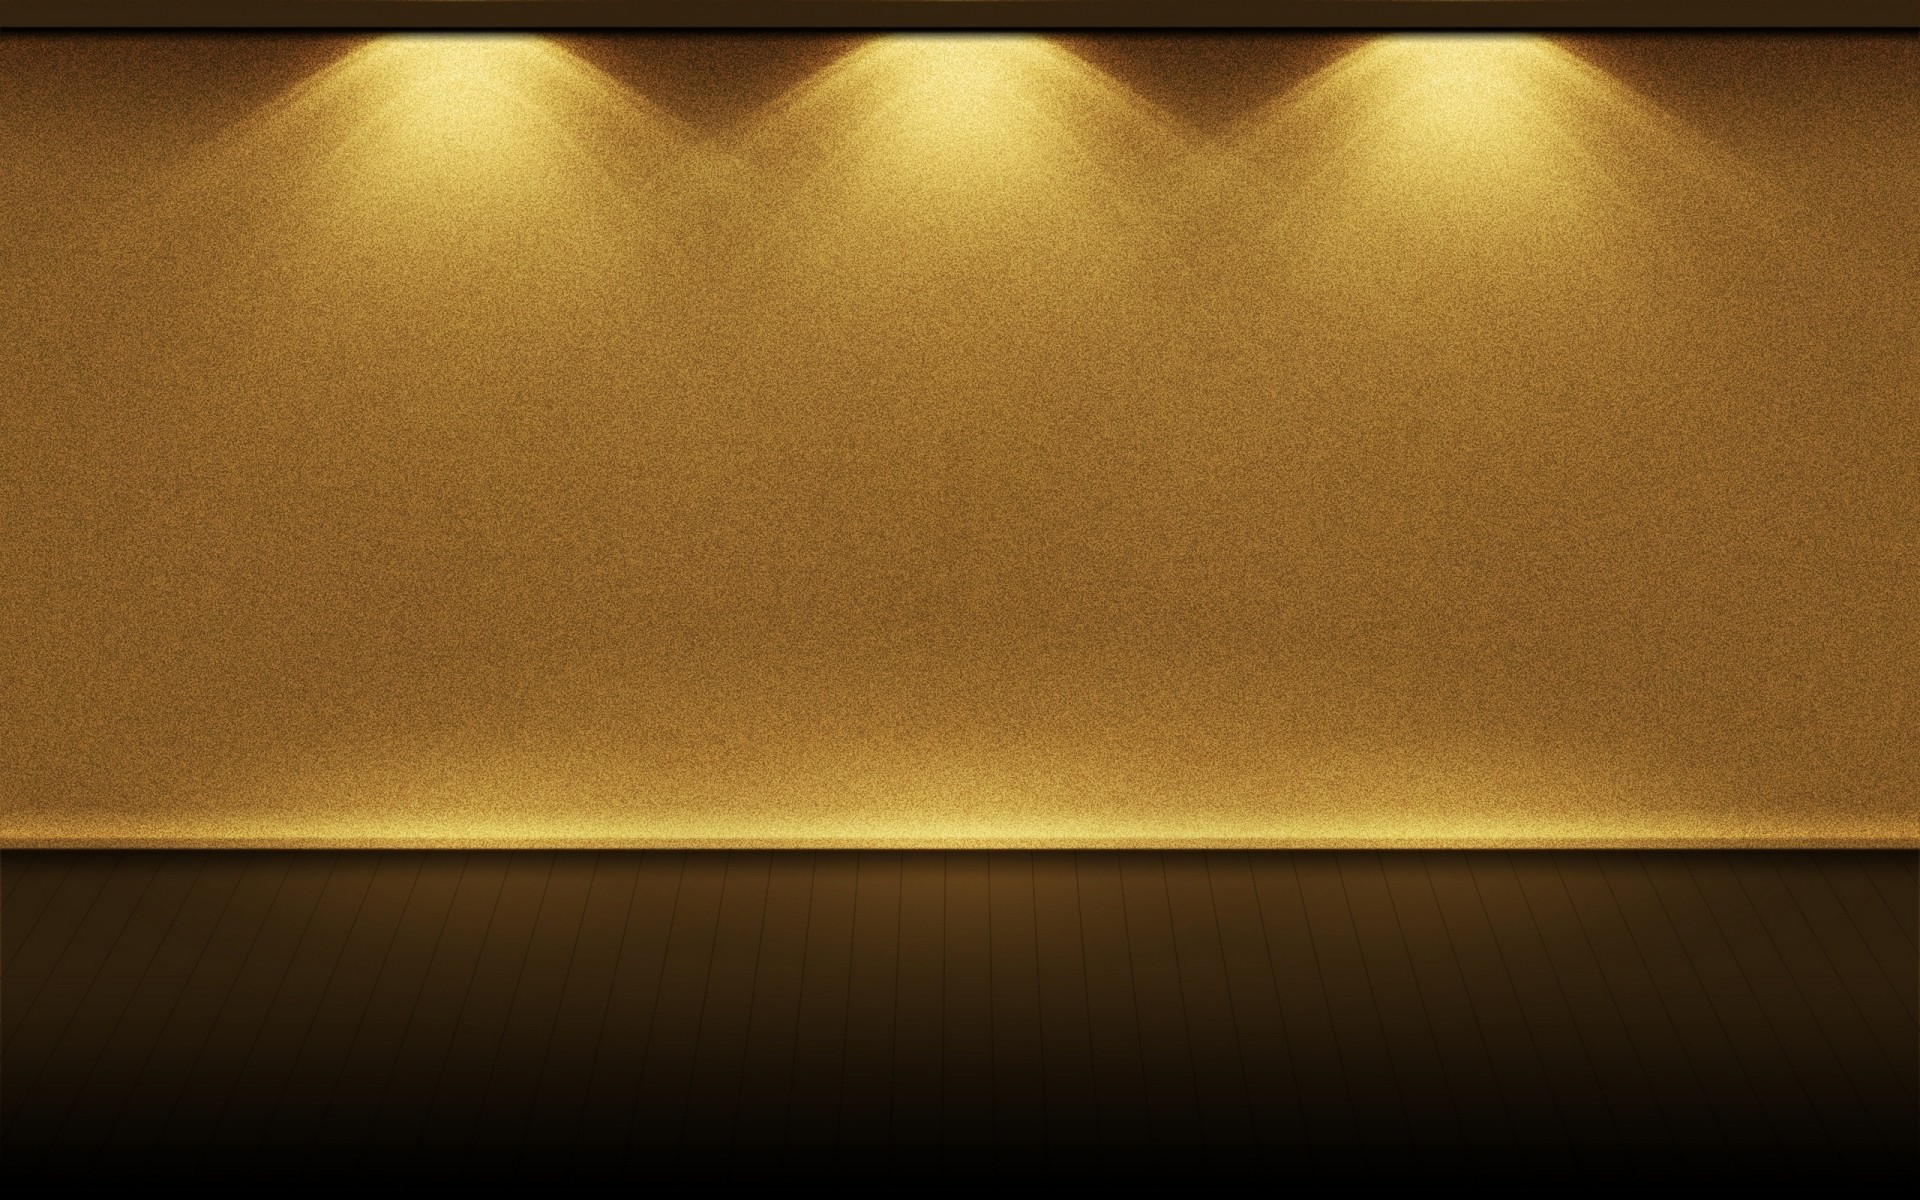 minimalism art abstract light texture wallpaper desktop gold design sunset background pattern graphic gradient blur vintage